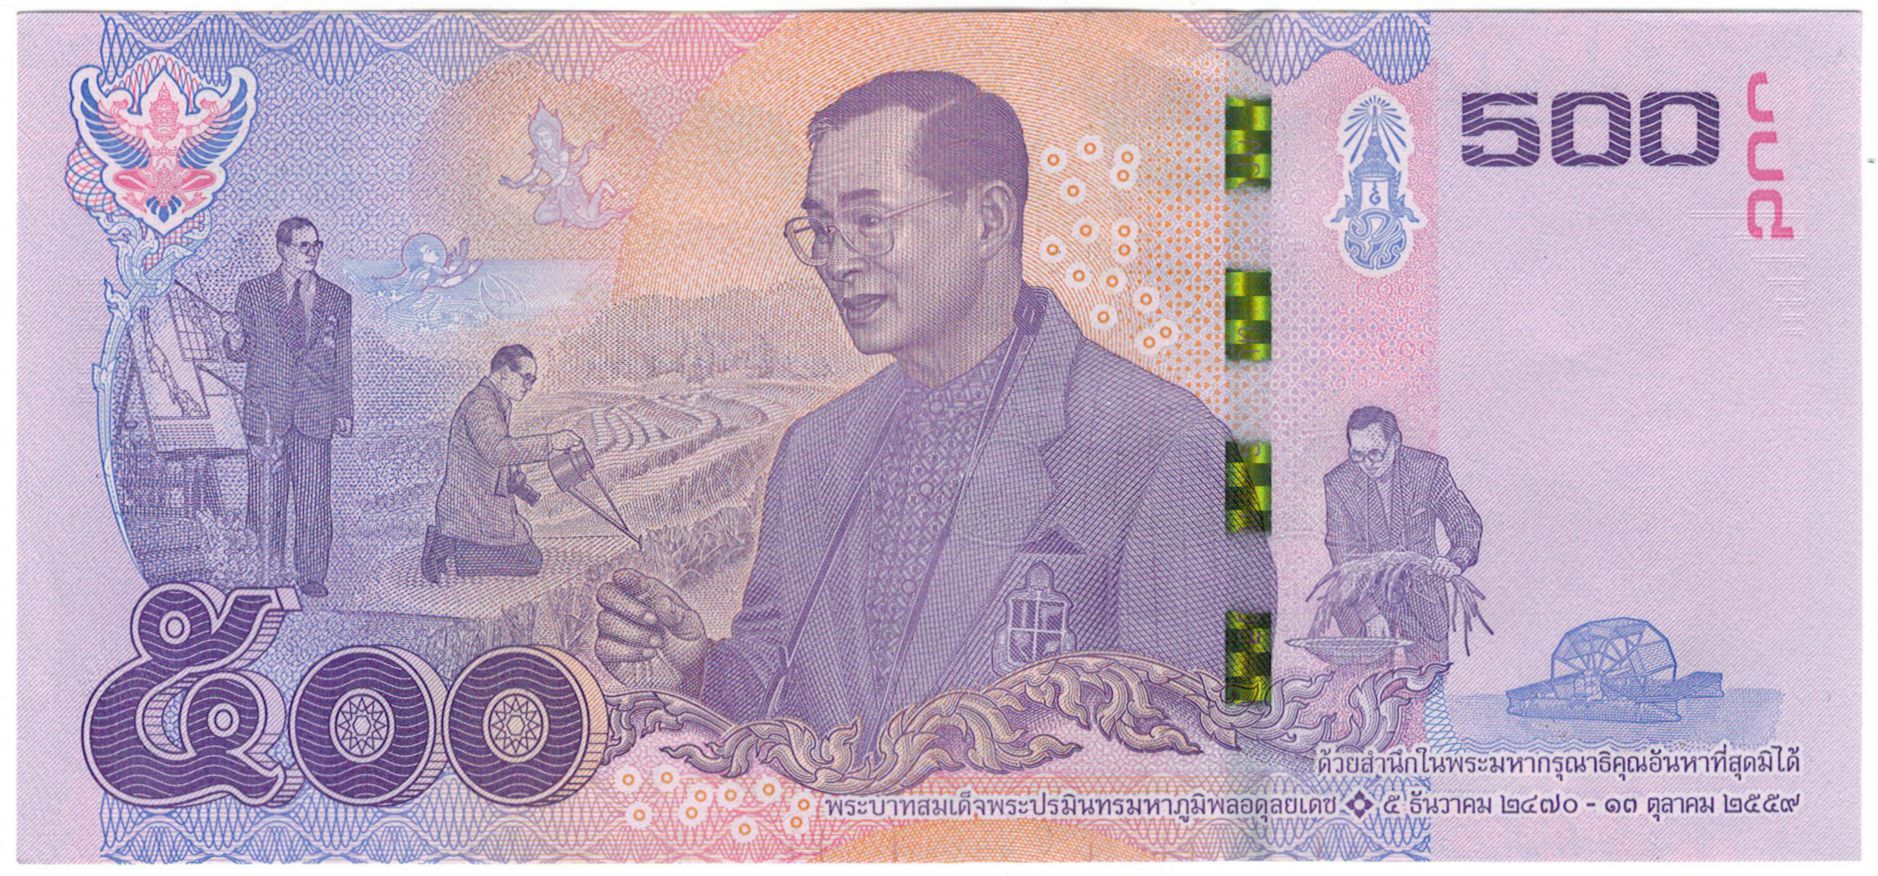 500 Бат Тайланд. Банкнота 50 бат Таиланд 2017. Купюры Тайланда современные. Юбилейные банкноты Тайланда. 500 бат